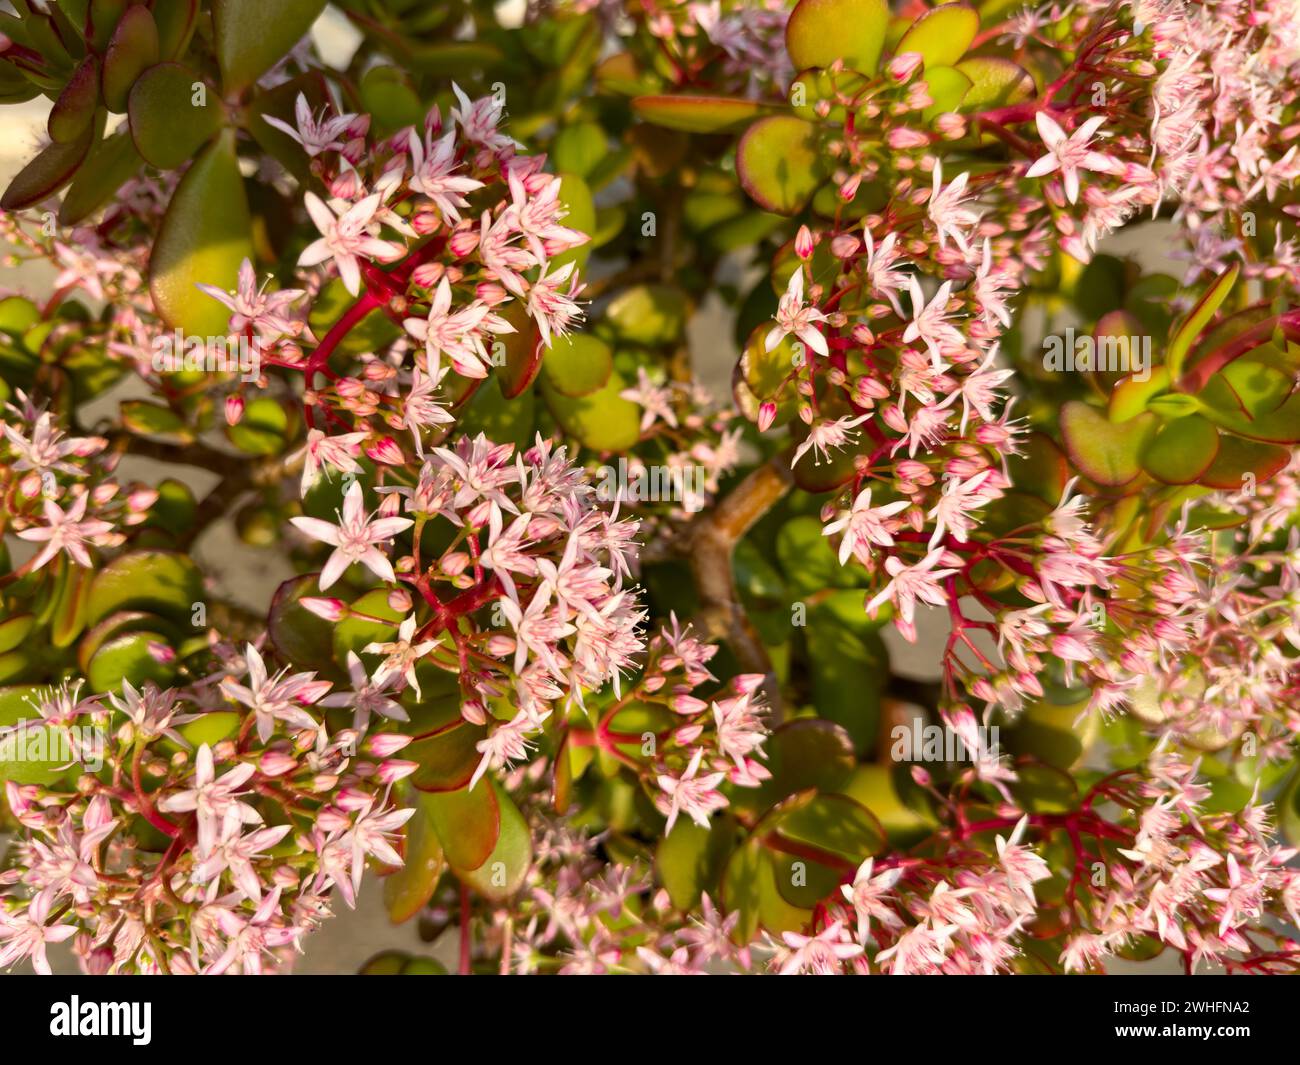 Flowering bush of Crassula ovata jade plant closeup Stock Photo